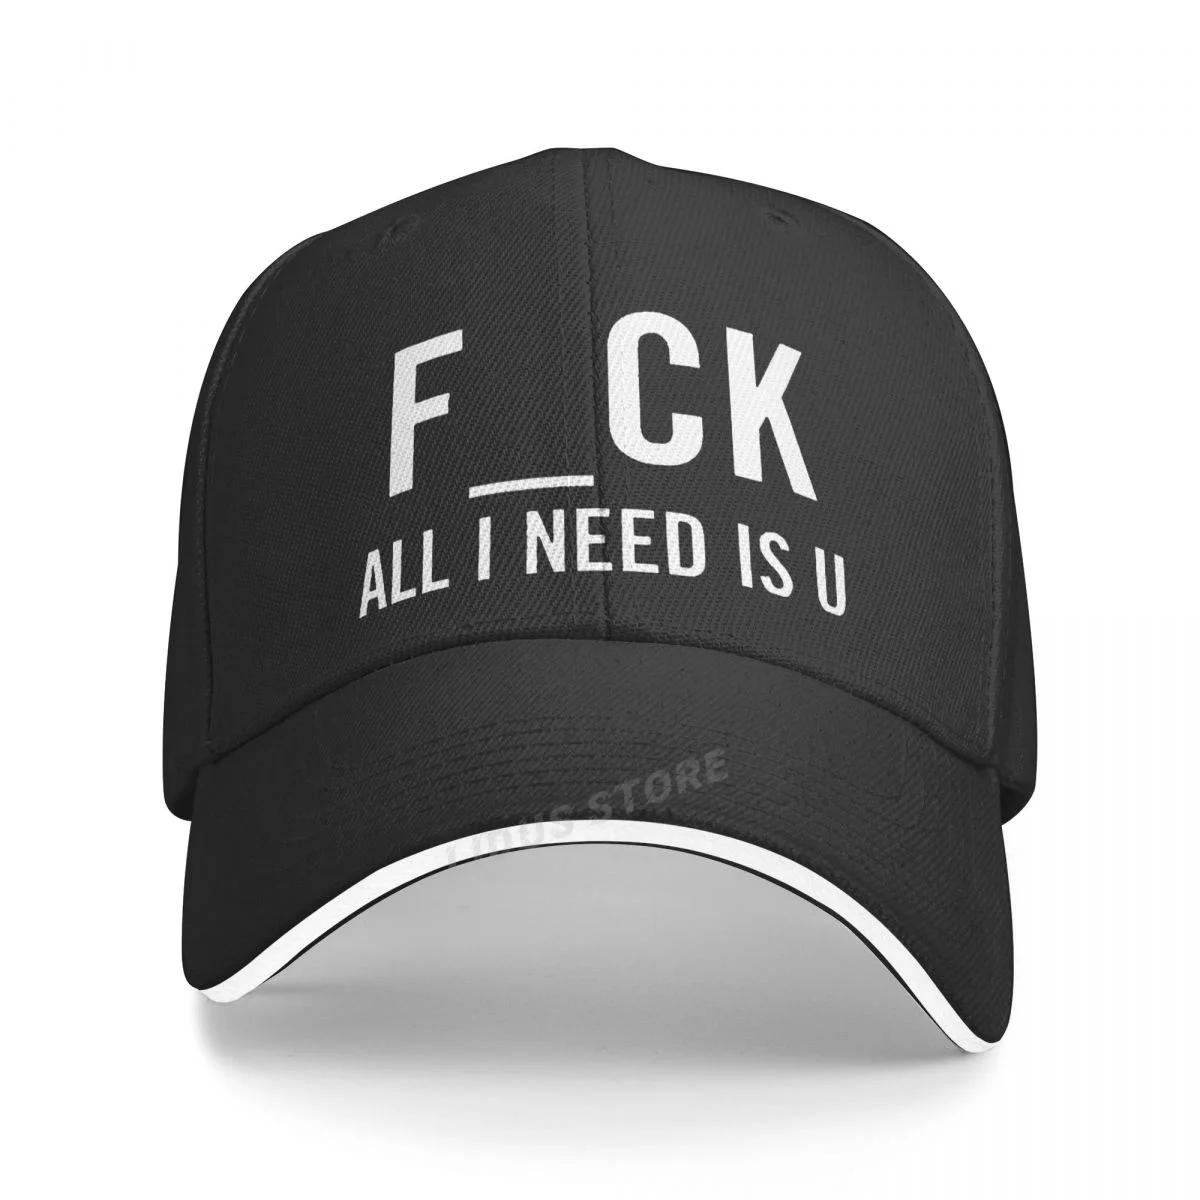 All I Need Is U Funny Letter Print Baseball Cap 100%Cotton Men Women Original Design Brand Snapback Hats